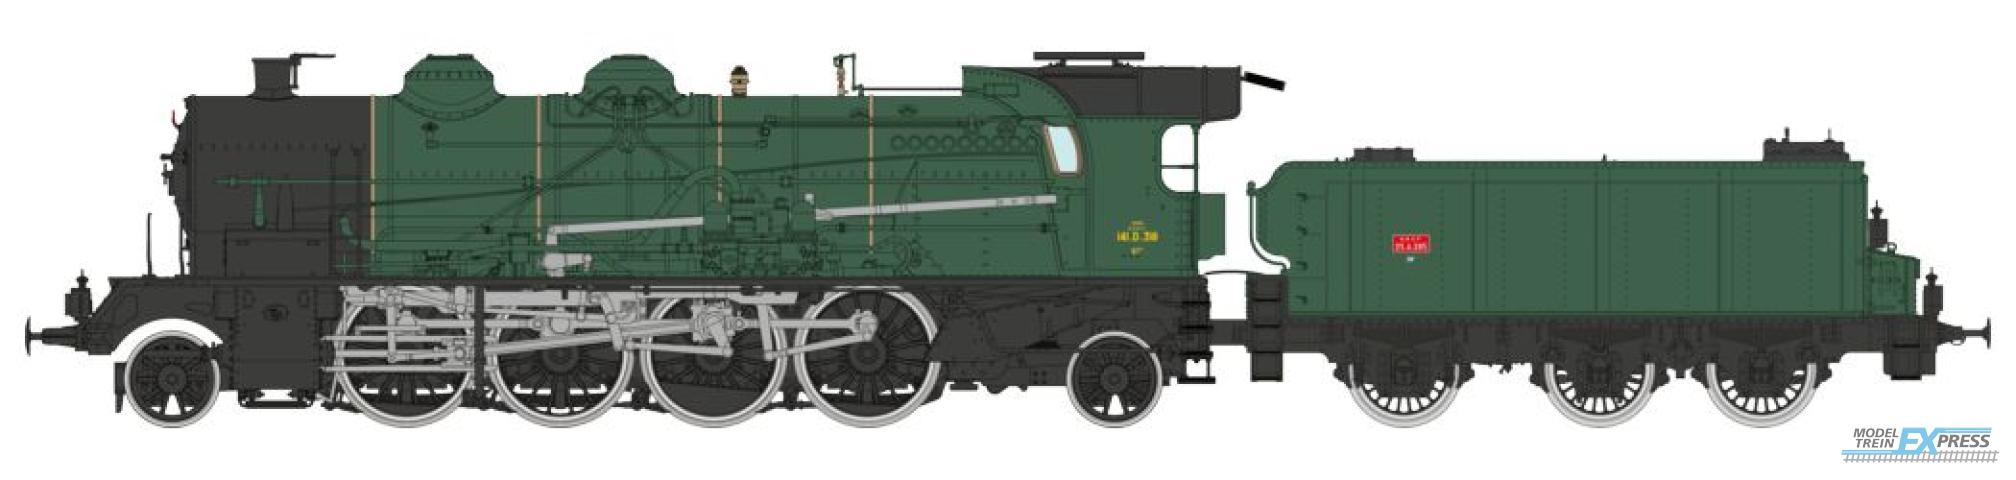 REE models MB-160 141 D 318 + Tender 25 A 285 Green & Black BADAN SNCF Era III - ANALOG